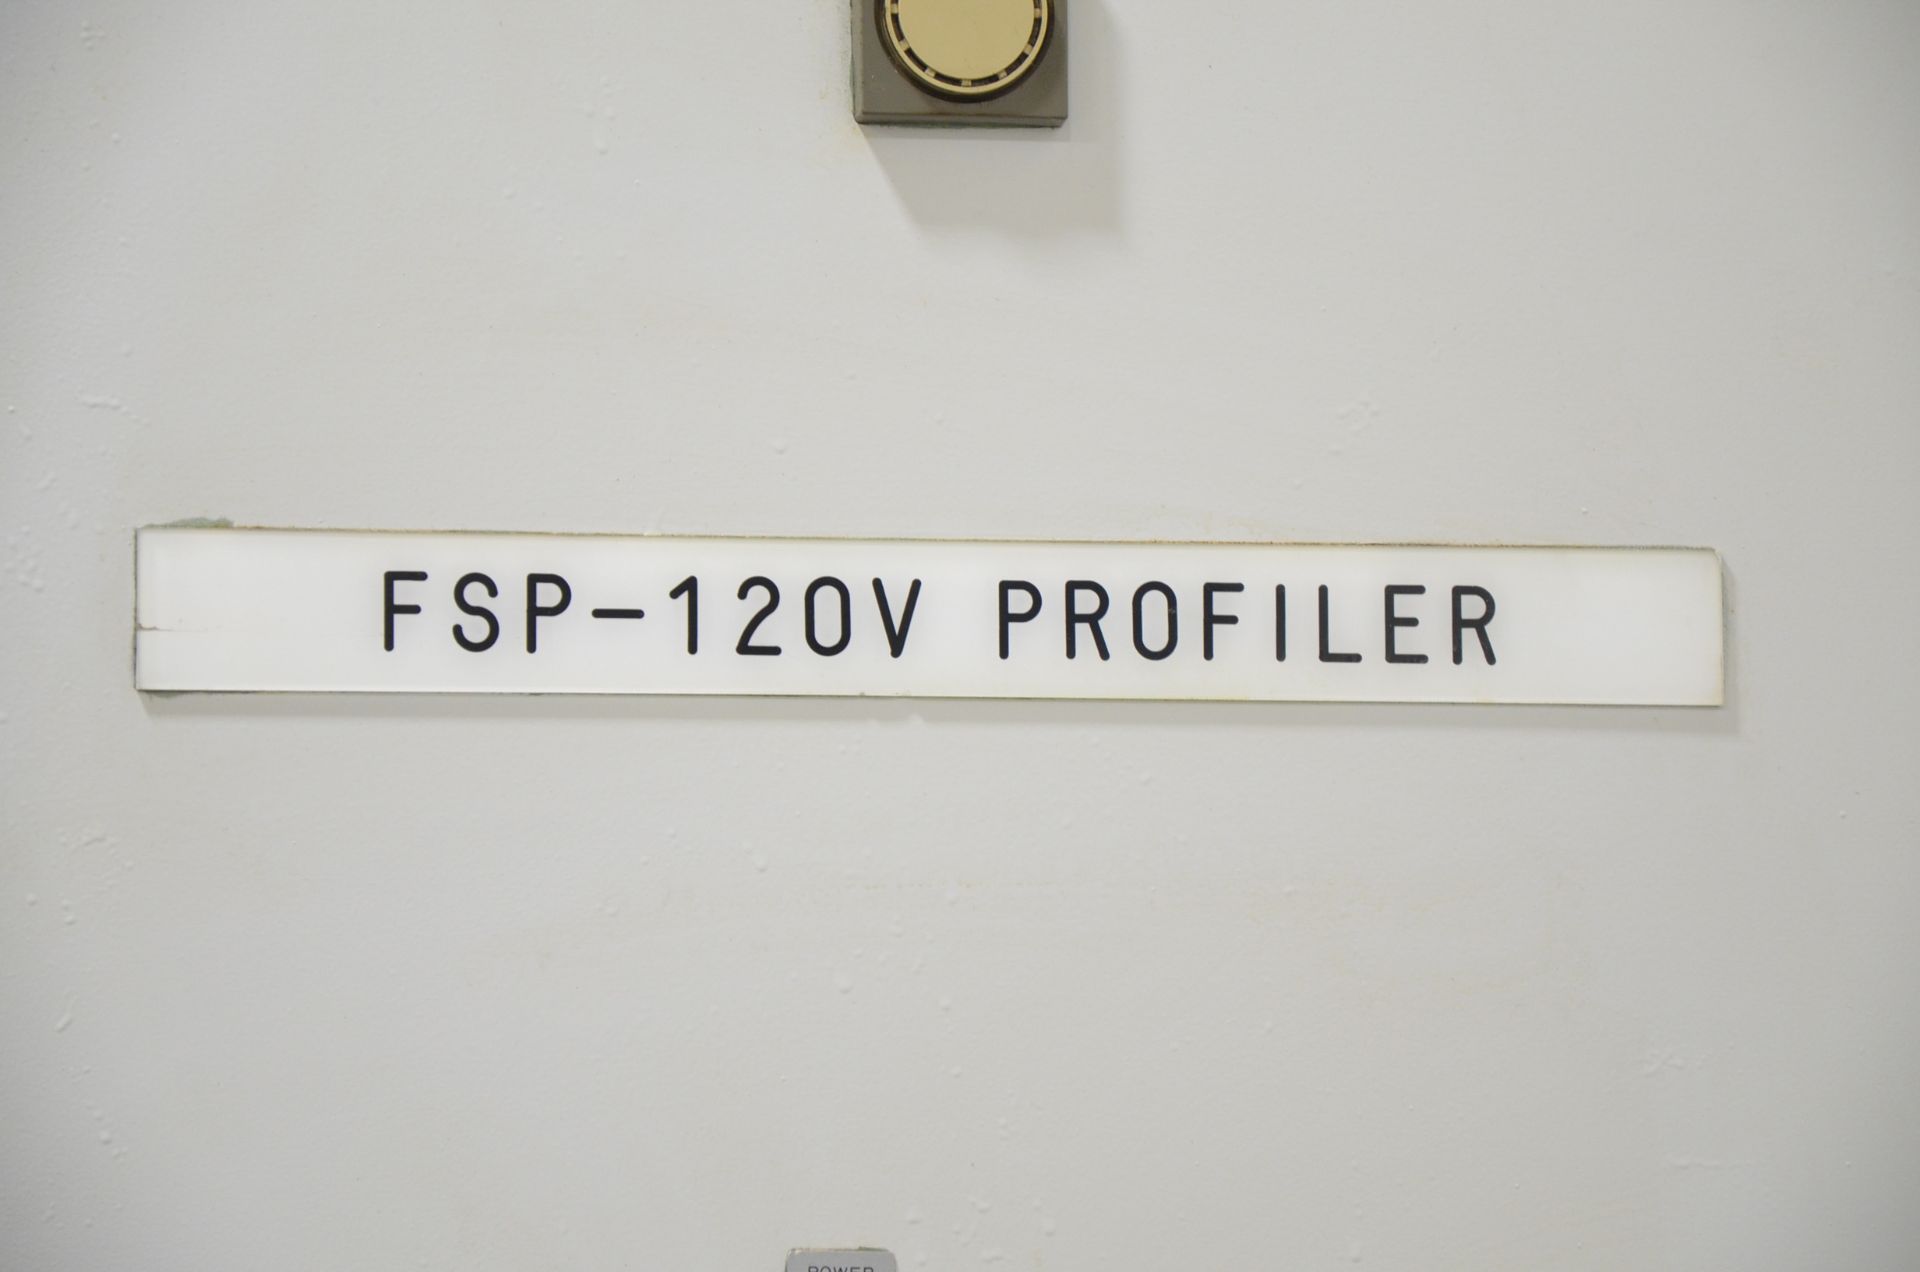 SNK FSP-120V PROFILER (3) SPINDLE VERTICAL CNC AEROSPACE PROFILER WITH RETROFIT FANUC 18I-M CNC - Image 14 of 16